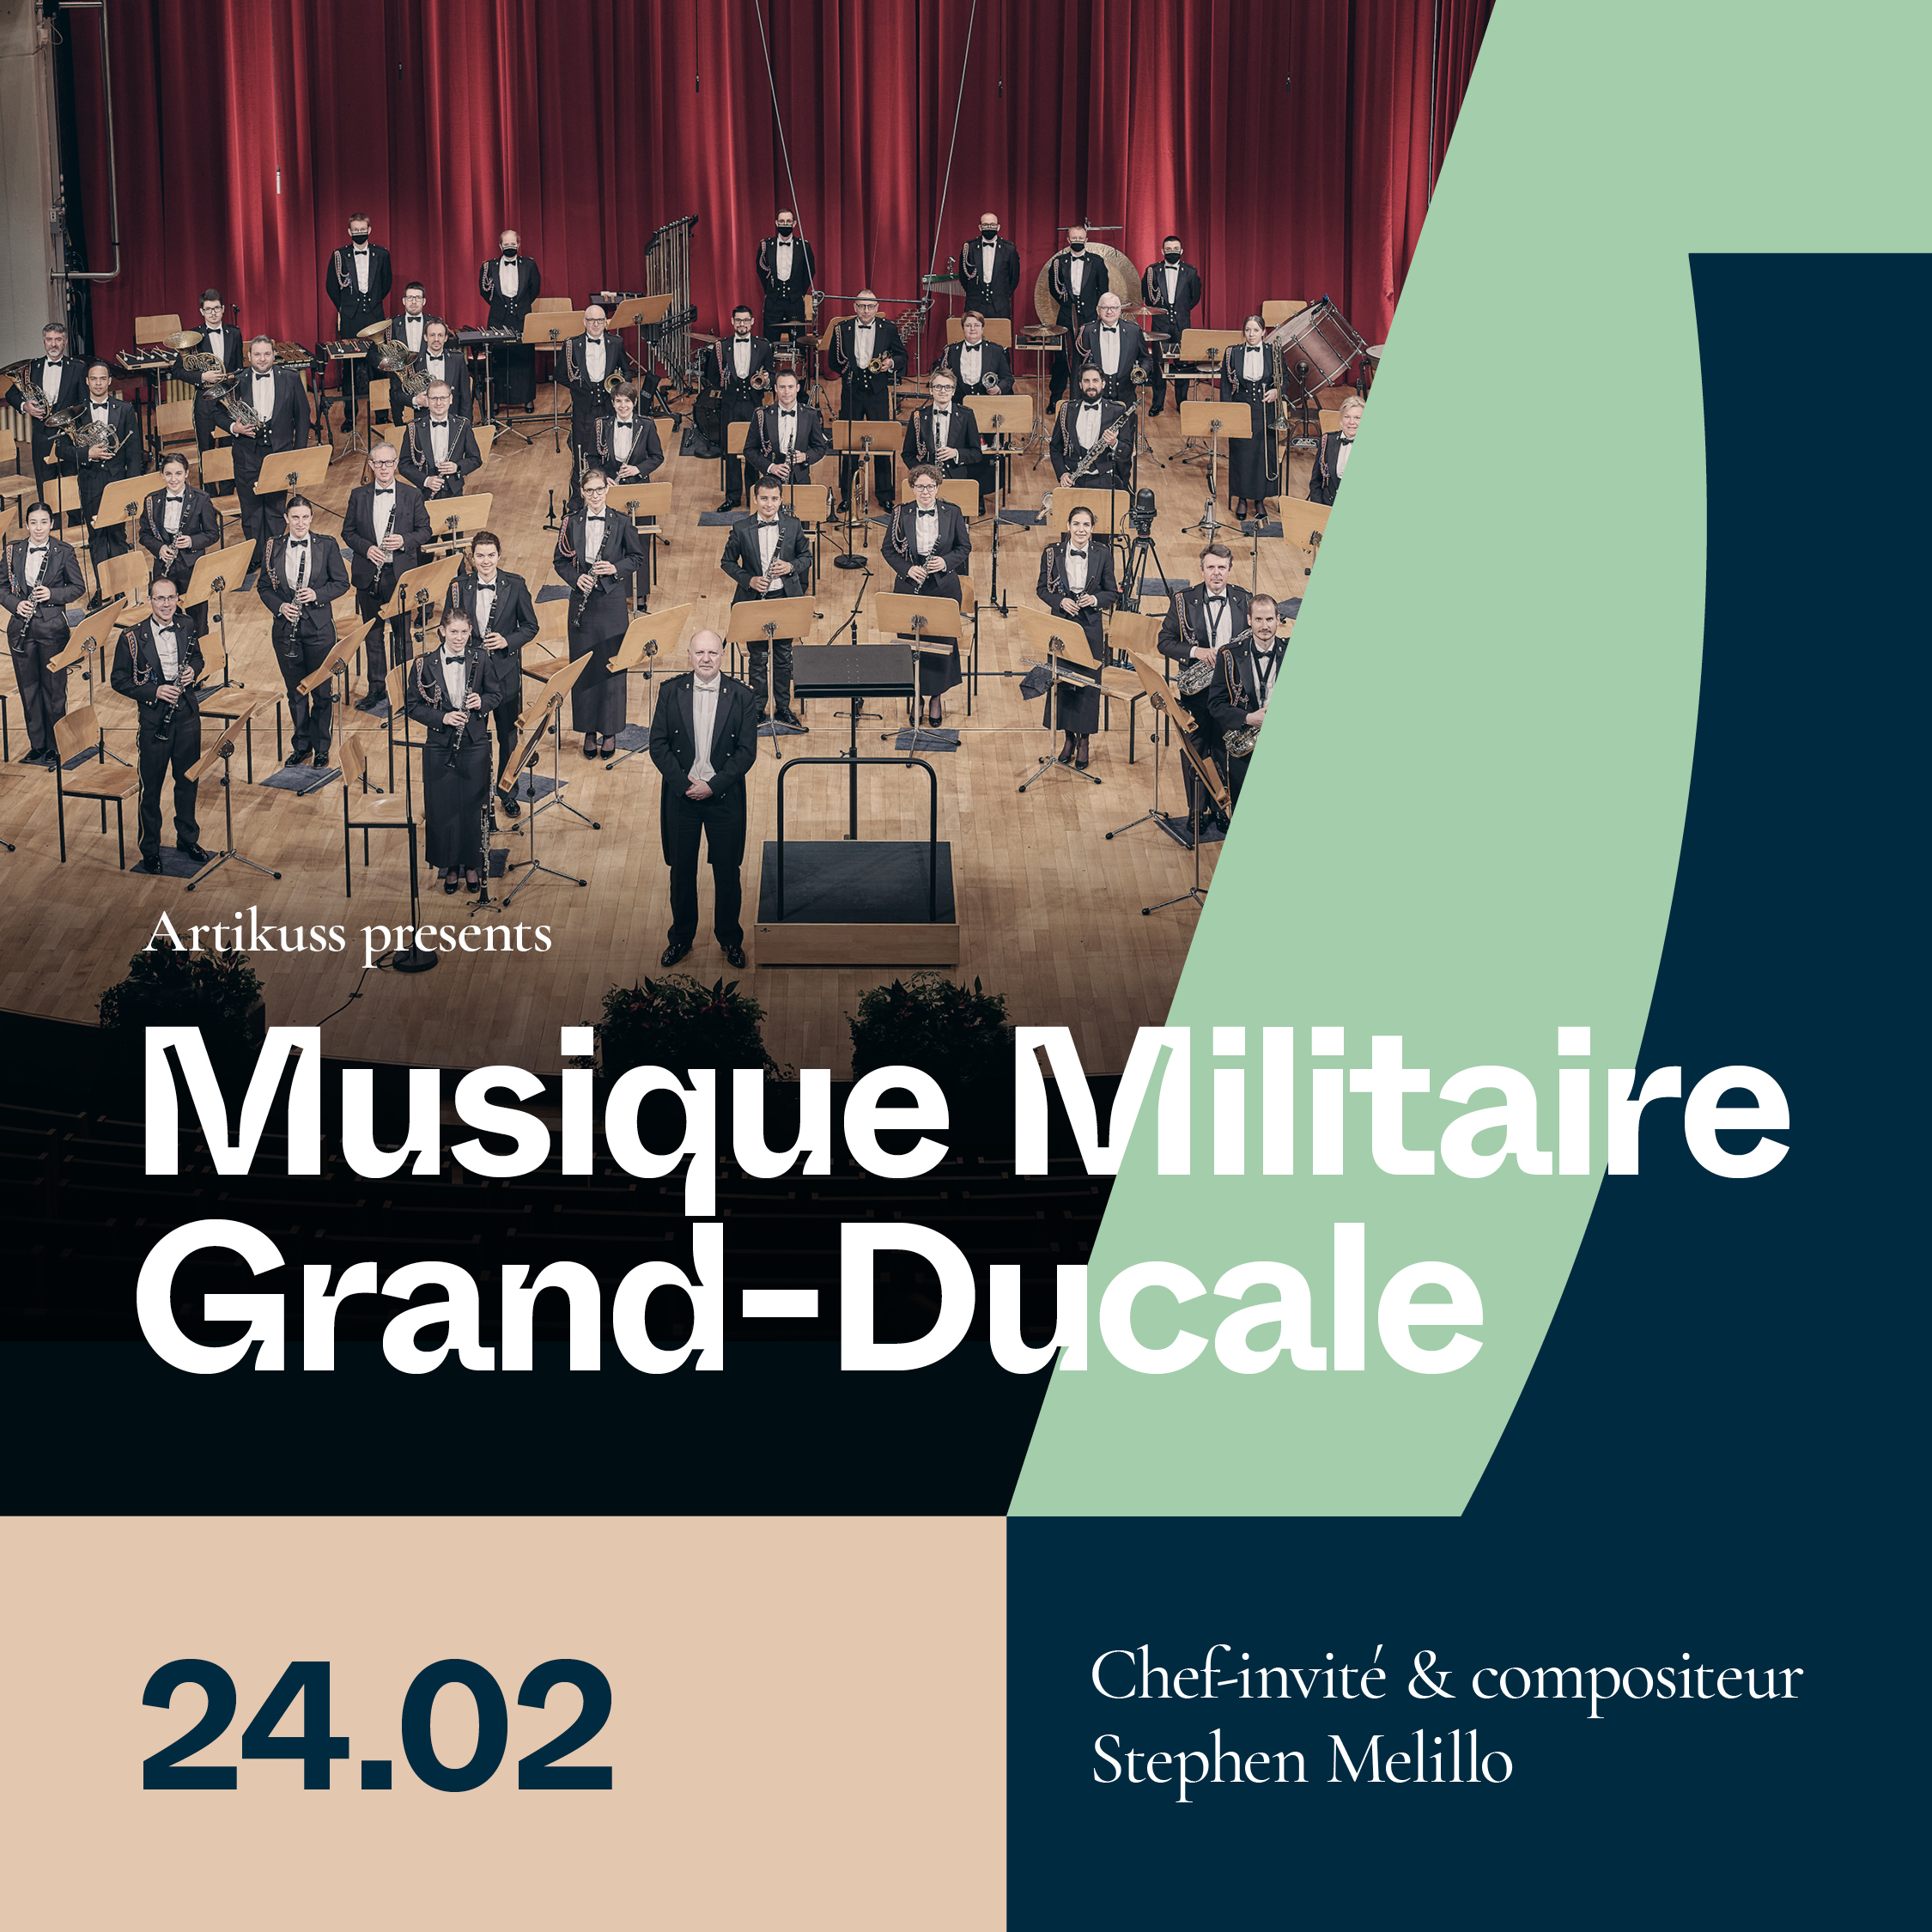 Musique Militaire Grand-Ducale & Stephen Melillo